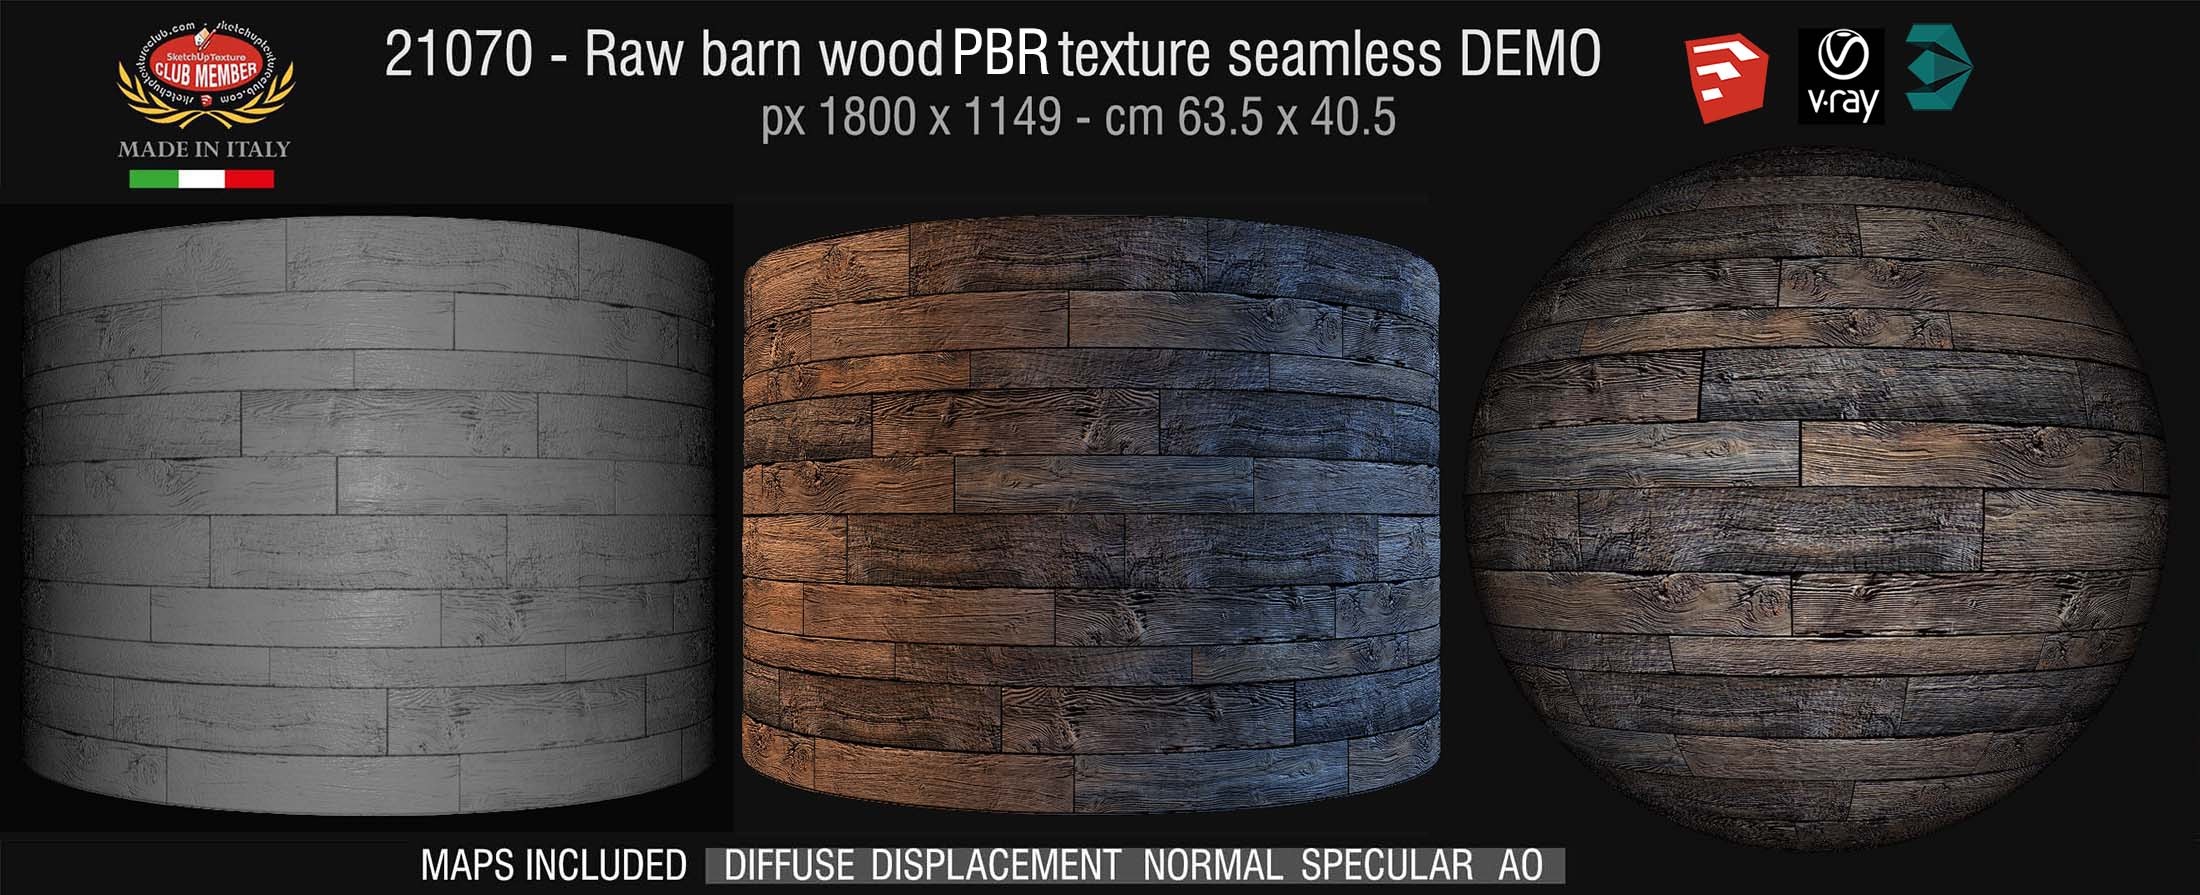 21070 Raw barn wood PBR texture seamless DEMO